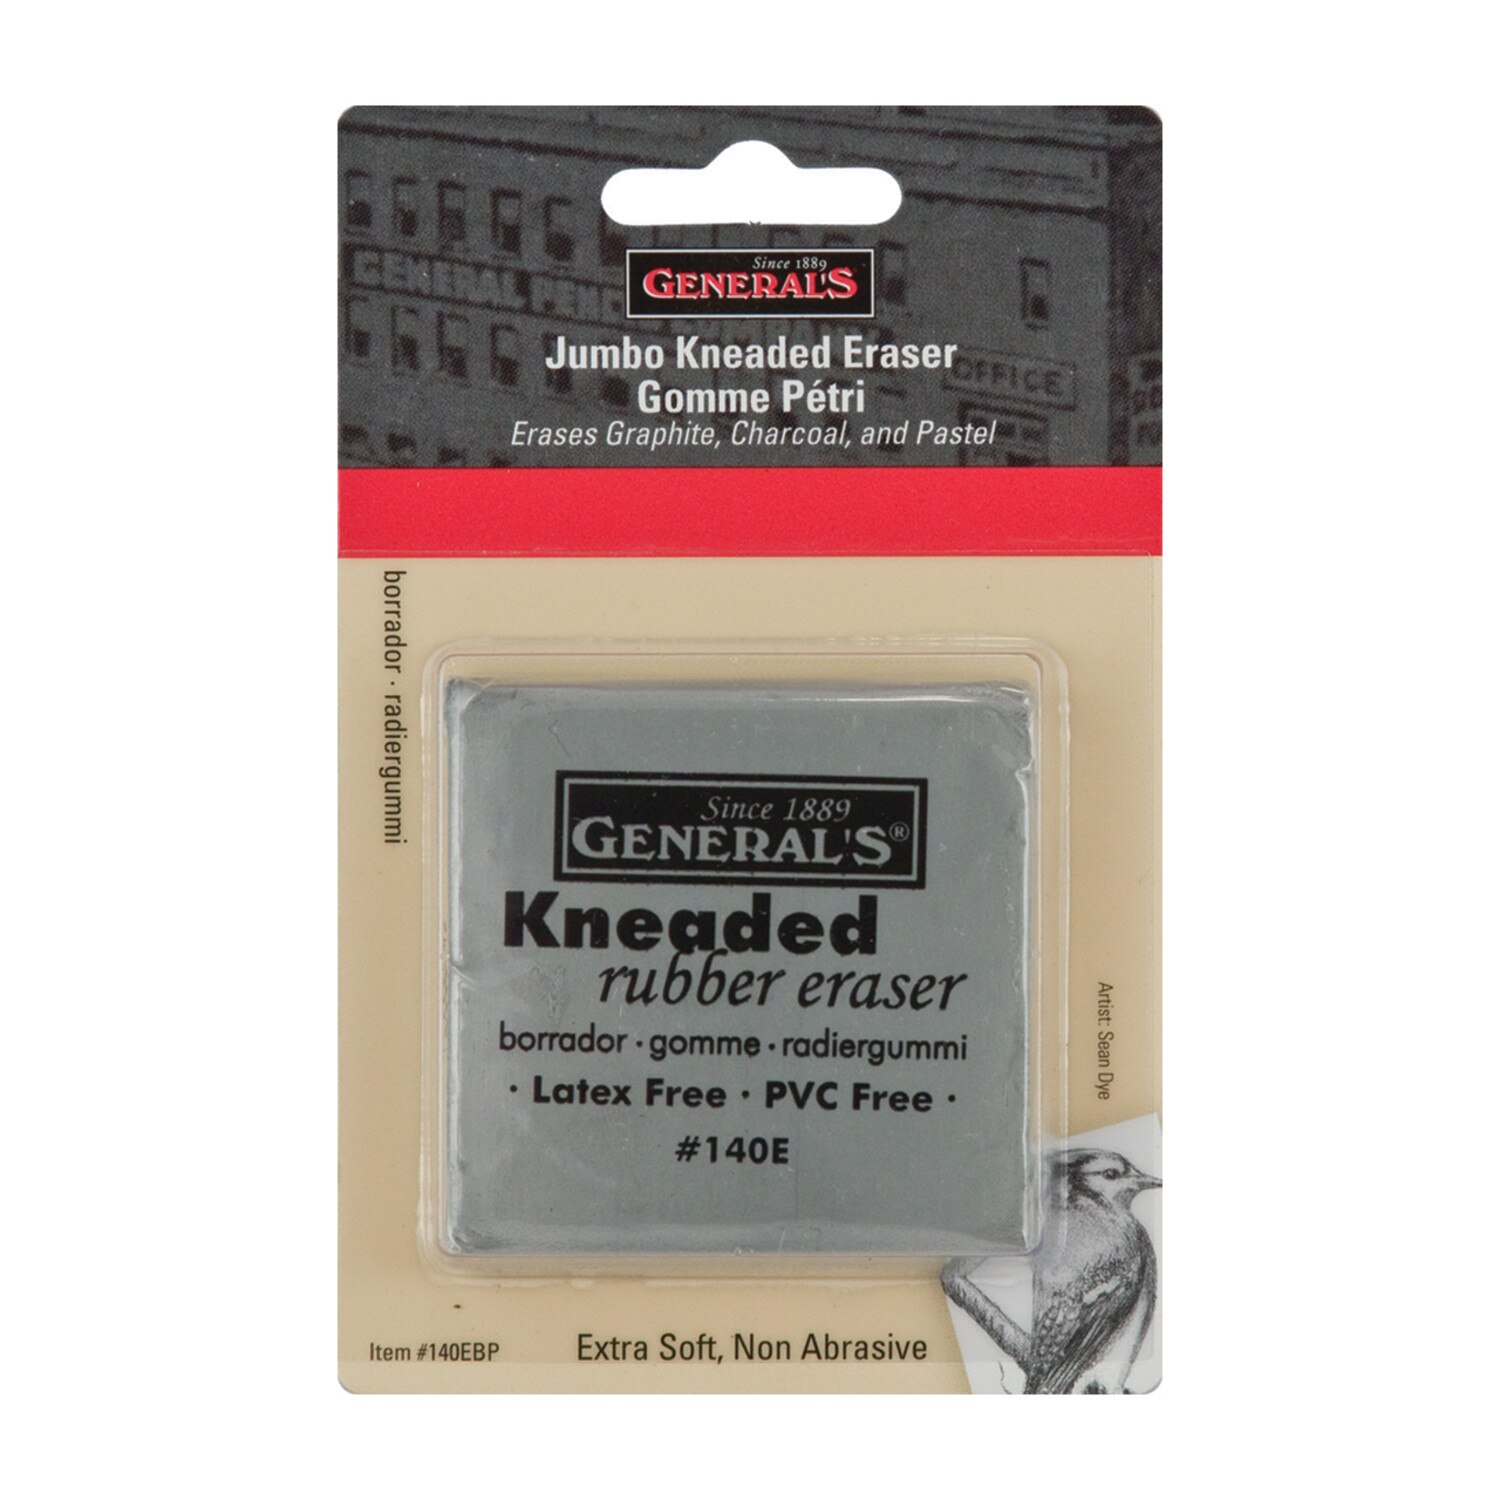 General Pencil Jumbo Kneaded Eraser, Carded Packaging